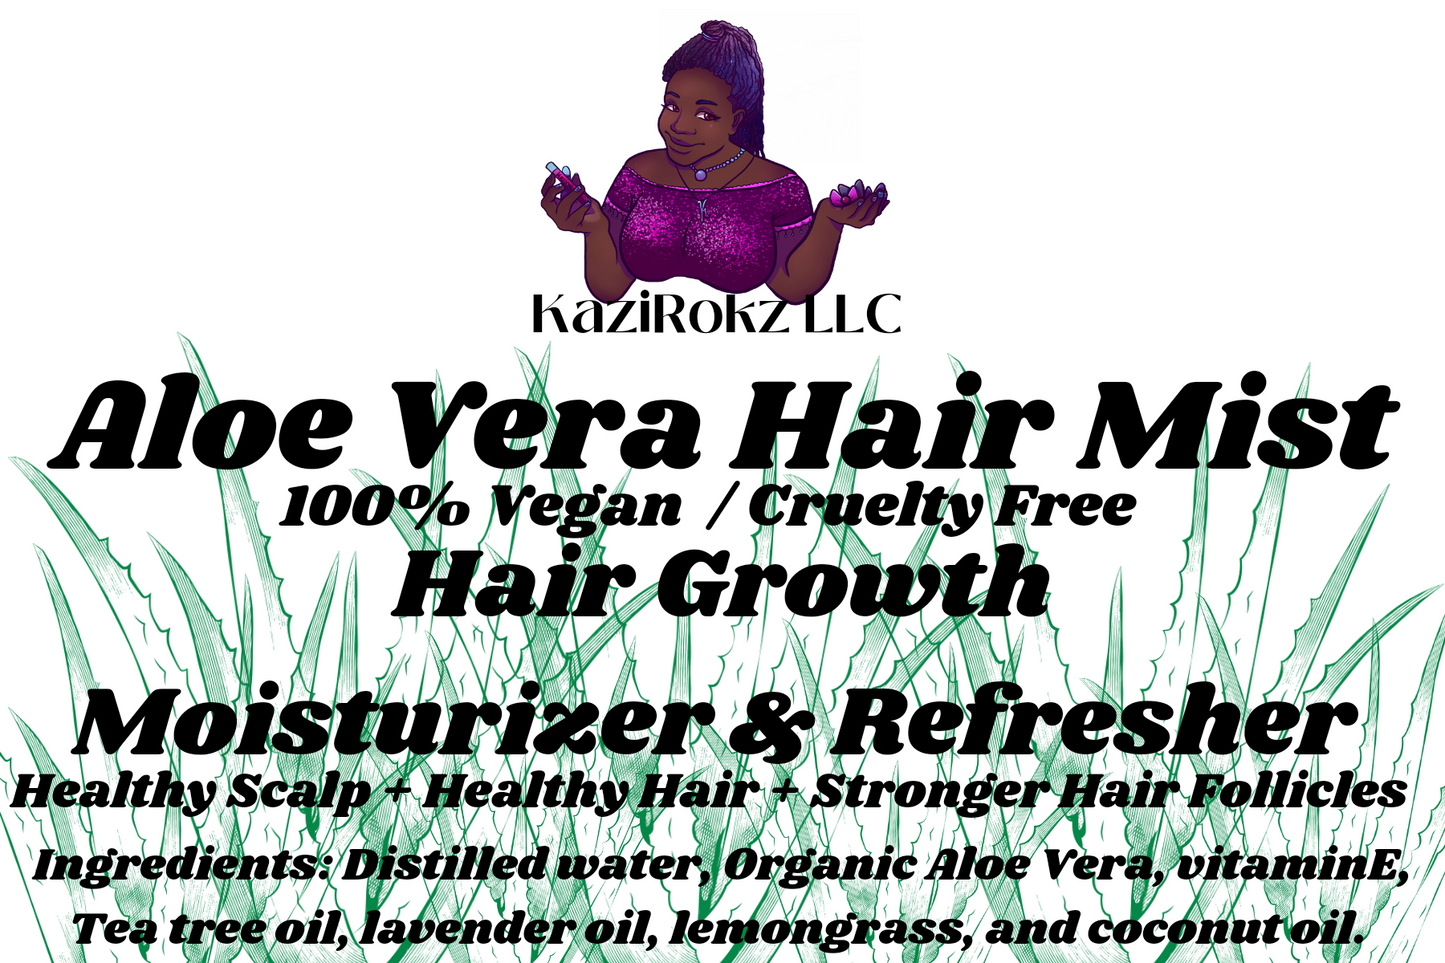 Aloe Vera Hair Mist / Dry Shampoo (100% Vegan/ CrueltyFree) Hair Growth moisturizer and refresher. 4oz